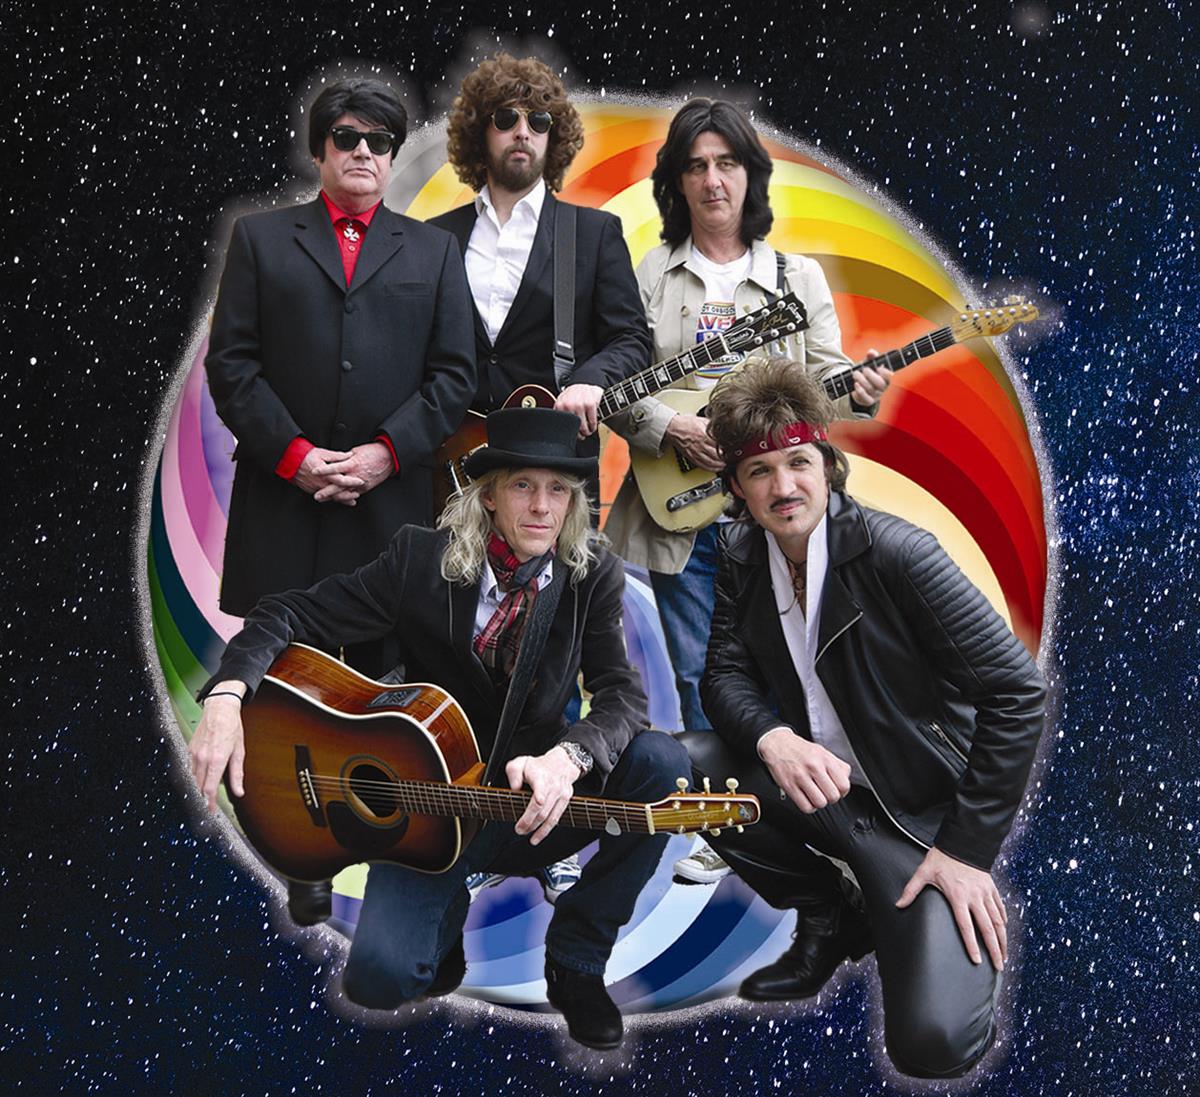 Paul Hopkins’ Roy Orbison & The Traveling Wilburys Experience